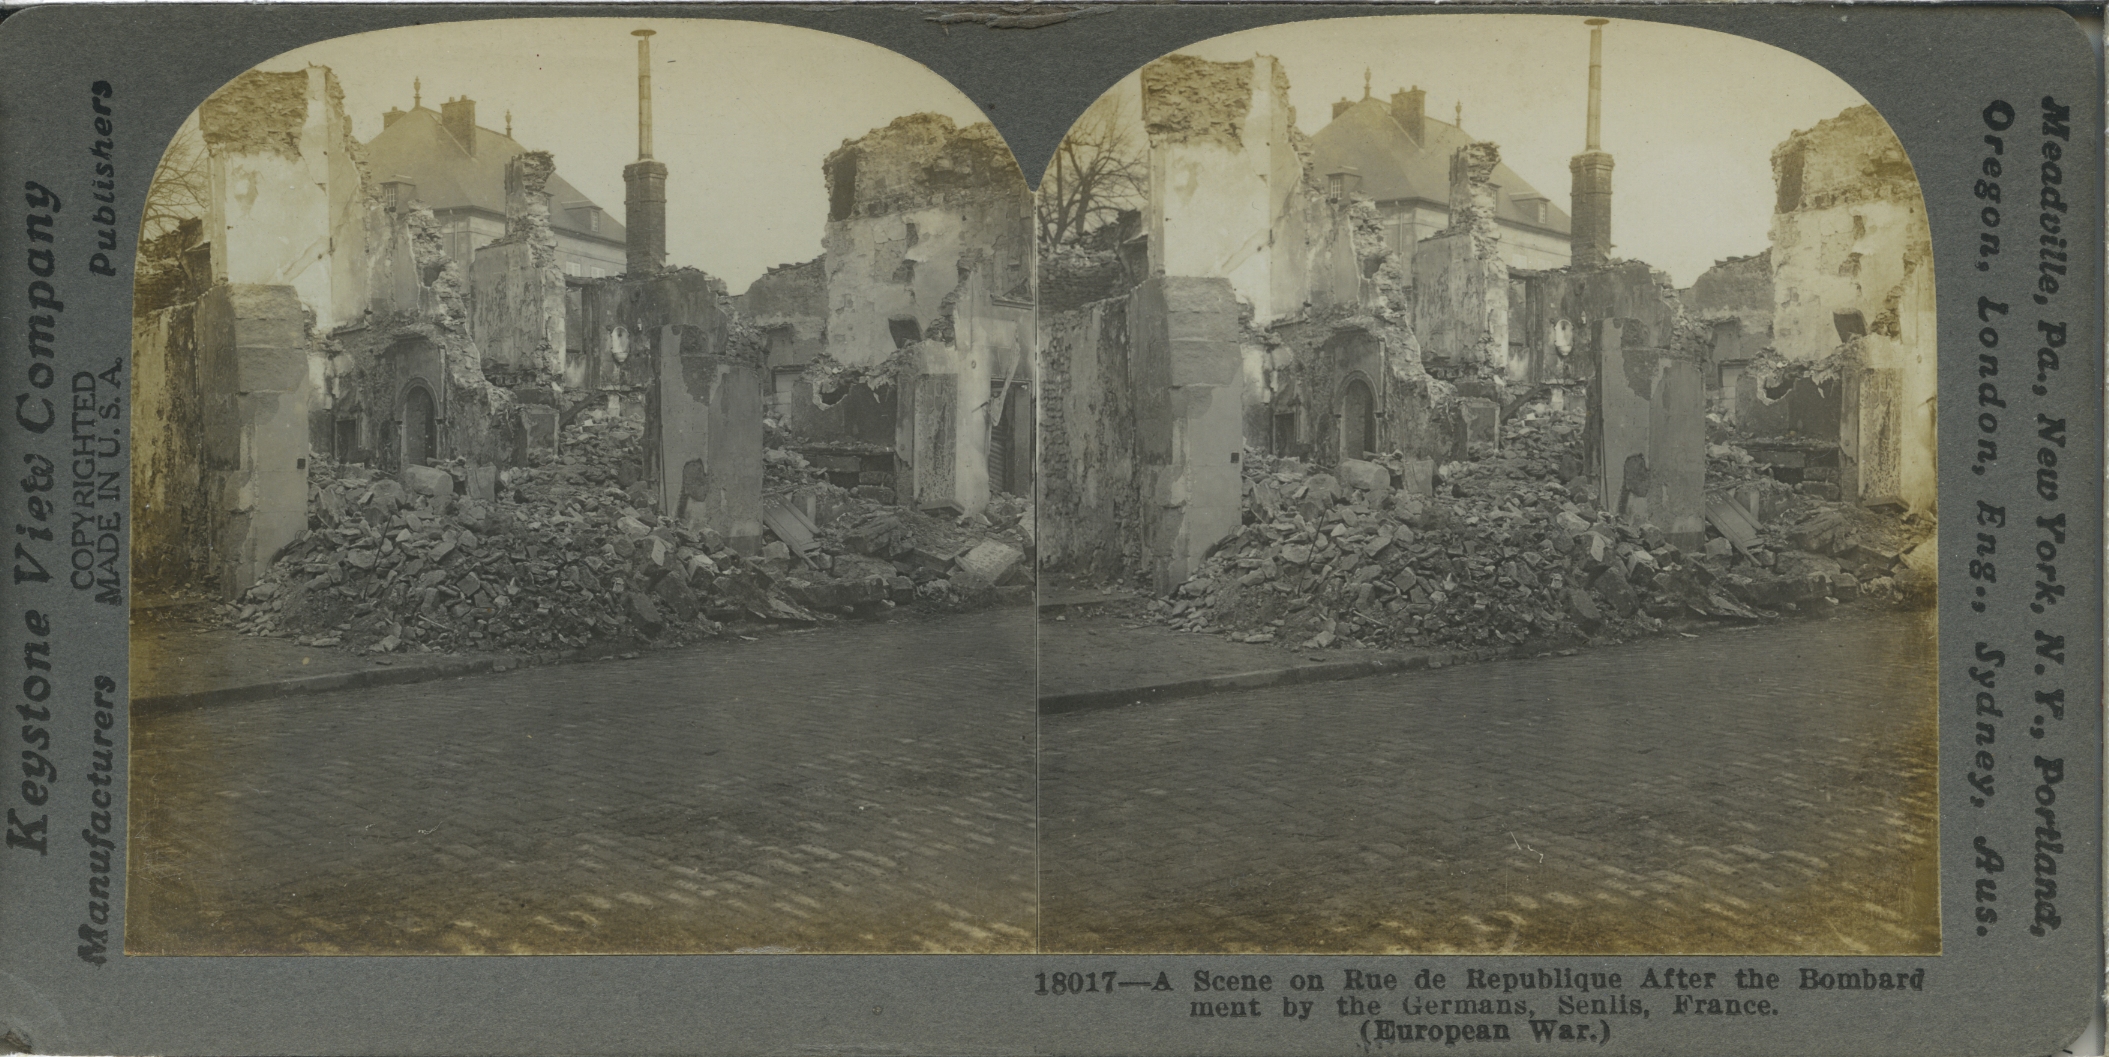 A Scene on Rue de Republique after the Bombardment by the Germans, Senlis, France